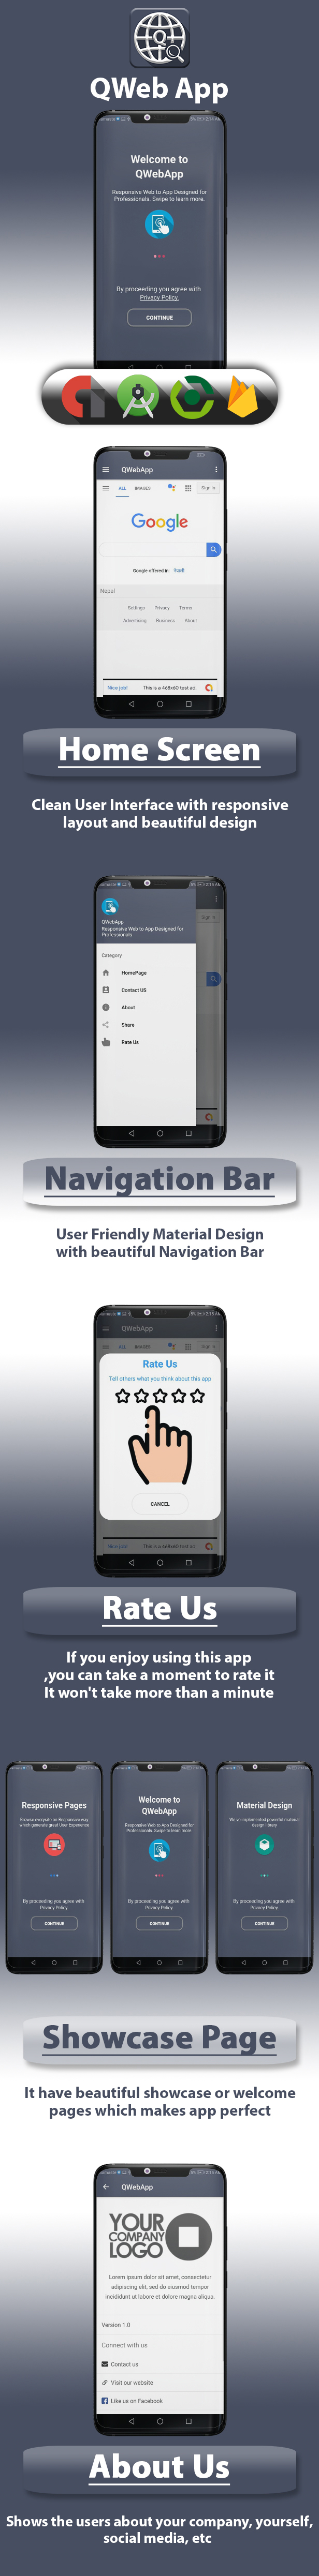 QWeb App - Professional Web2App Template | Material Design, OneSignal, Admob Ads - 4